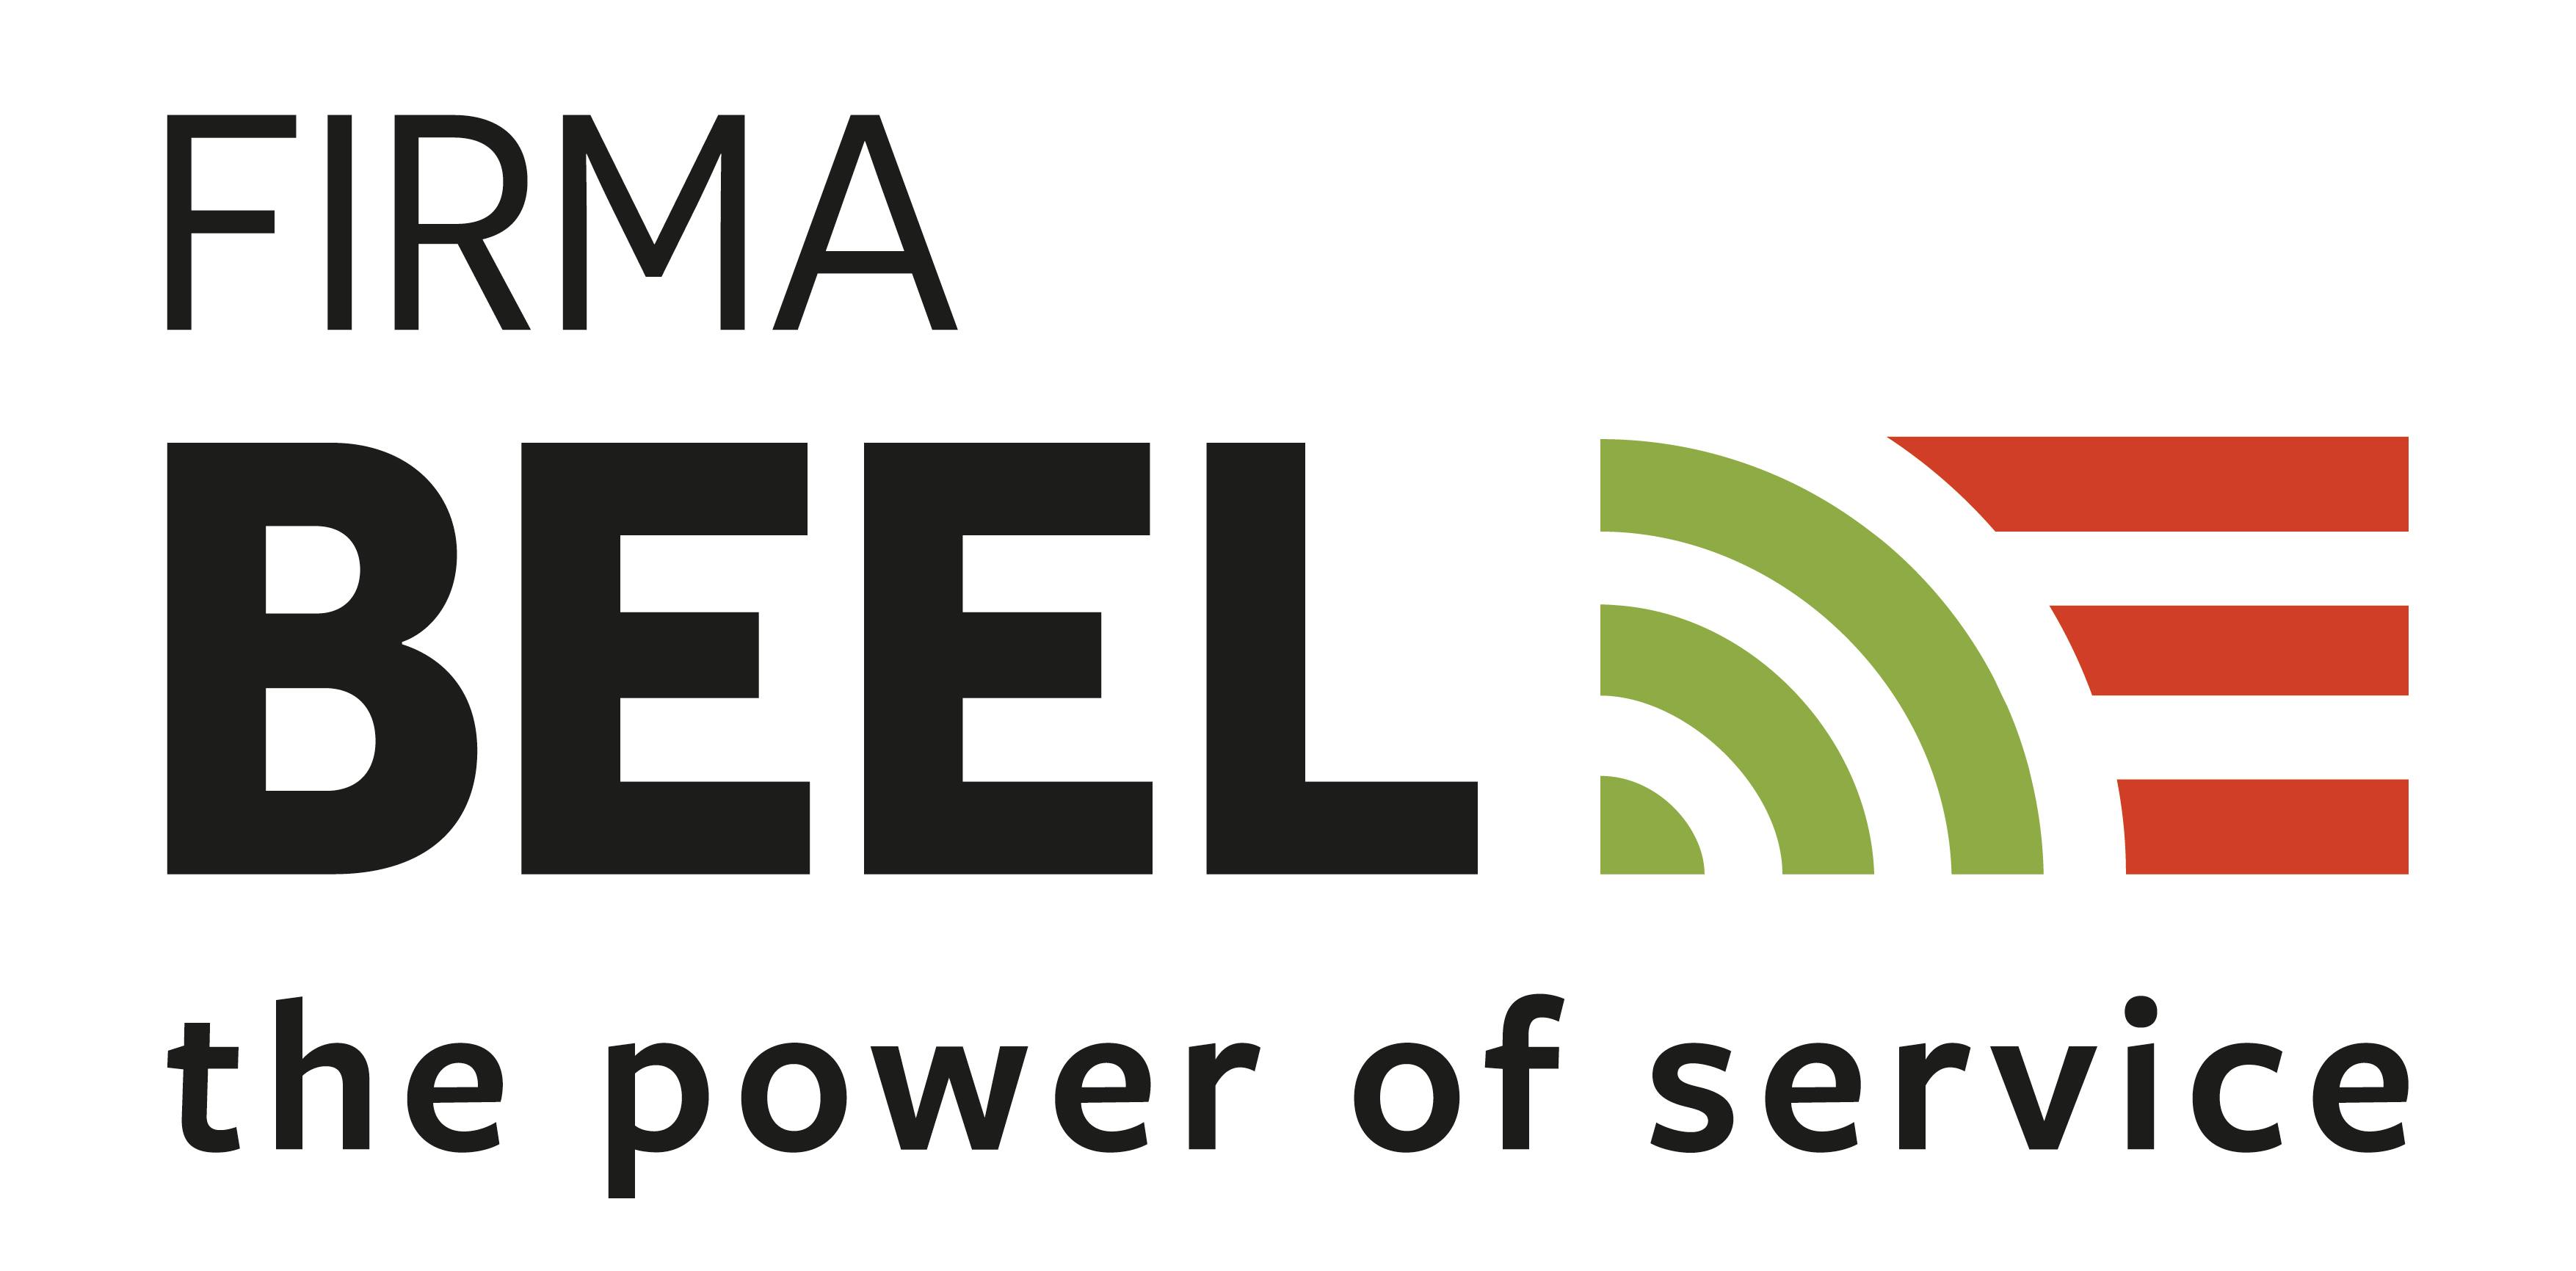 Company logo for 'FIRMA BEEL'.